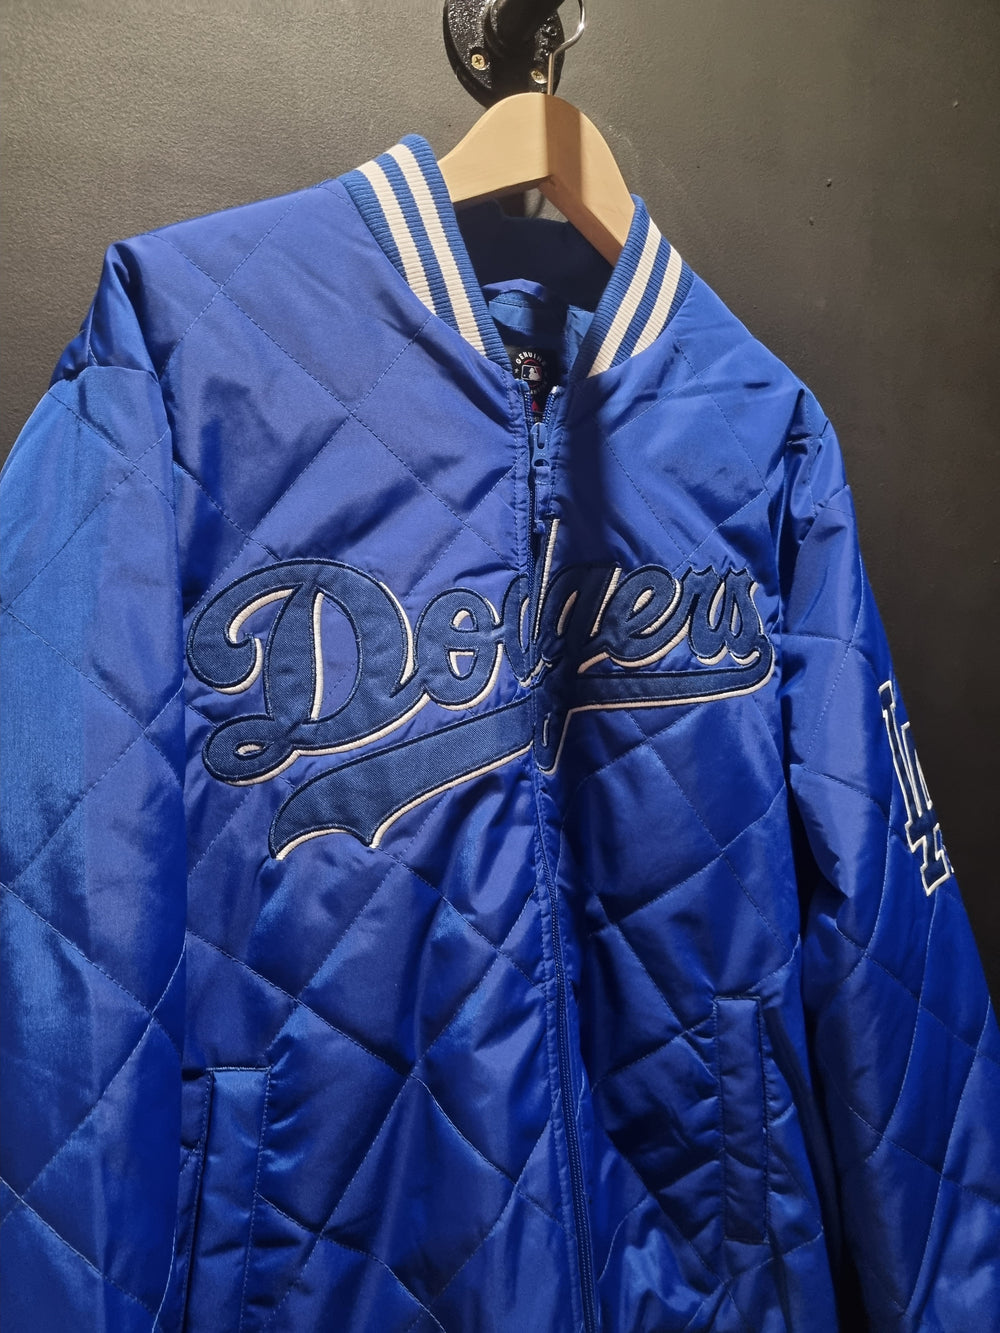 LA Dodgers Bombers Jacket Large